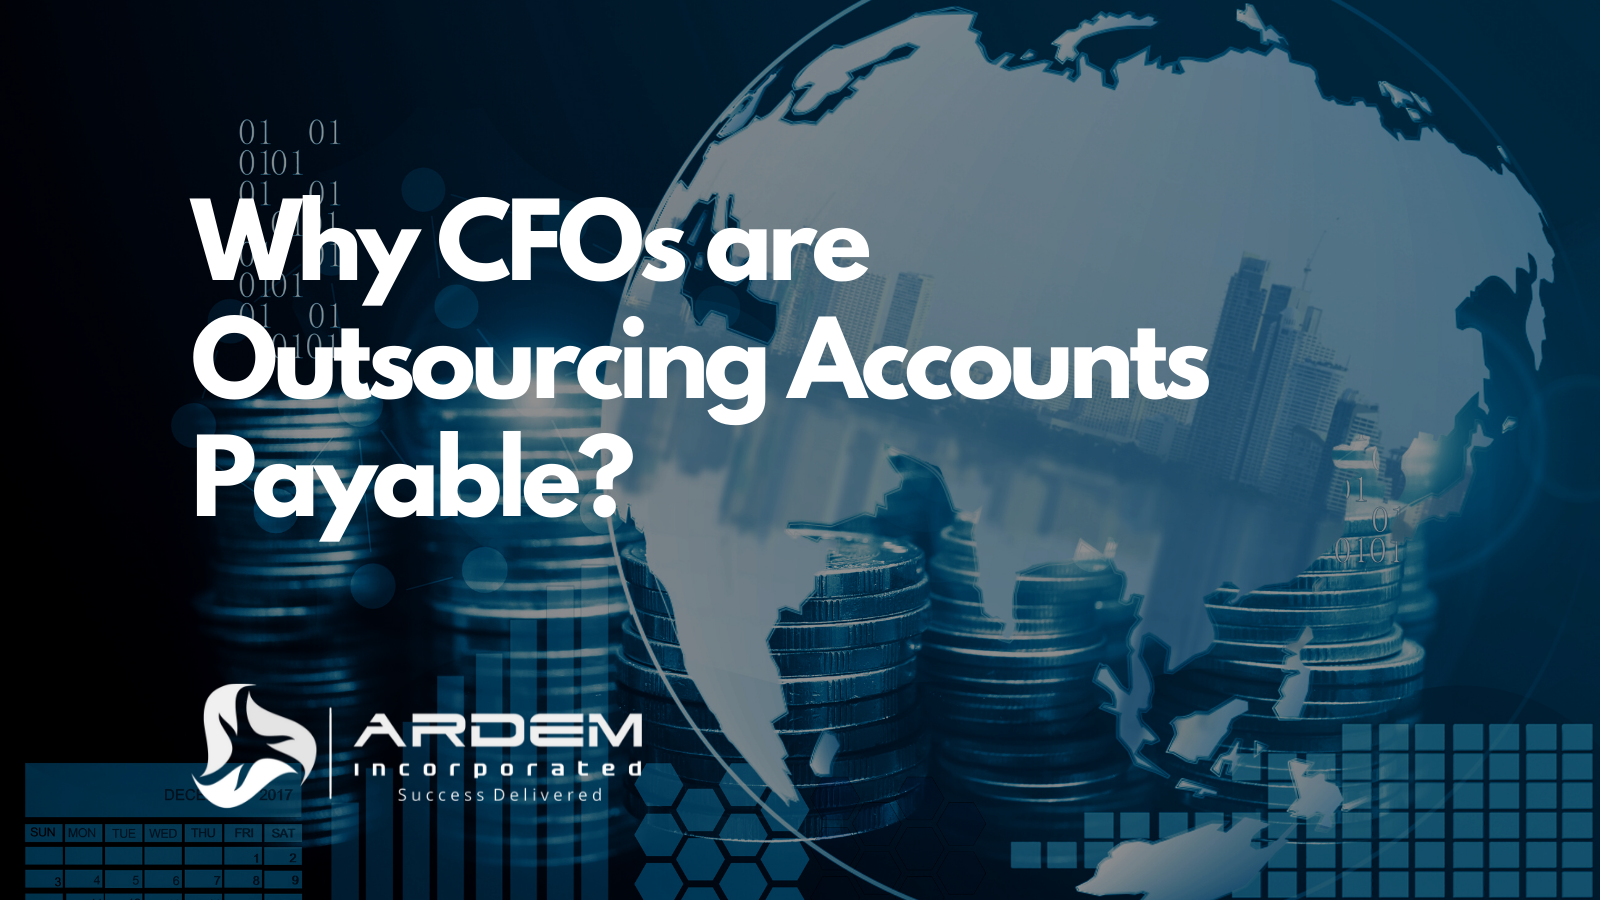 Accounts Payable Outsourcing for CFOs